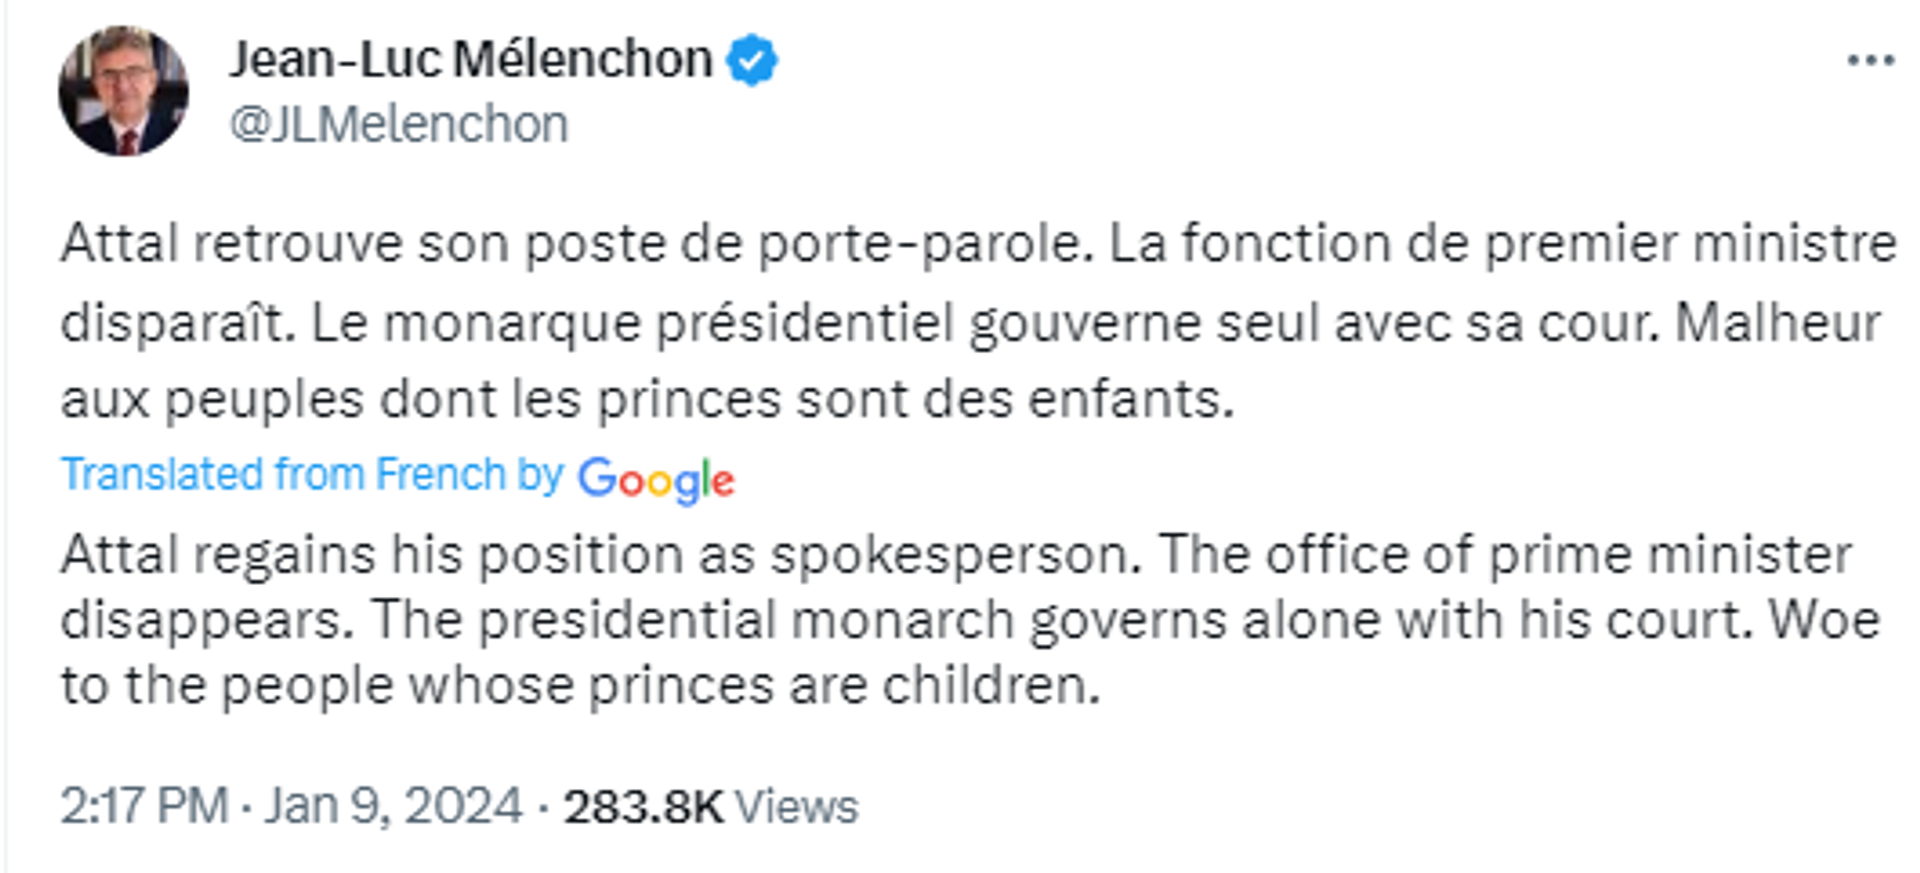 Screenshot of X post by French politician Jean-Luc Melenchon. - Sputnik International, 1920, 09.01.2024